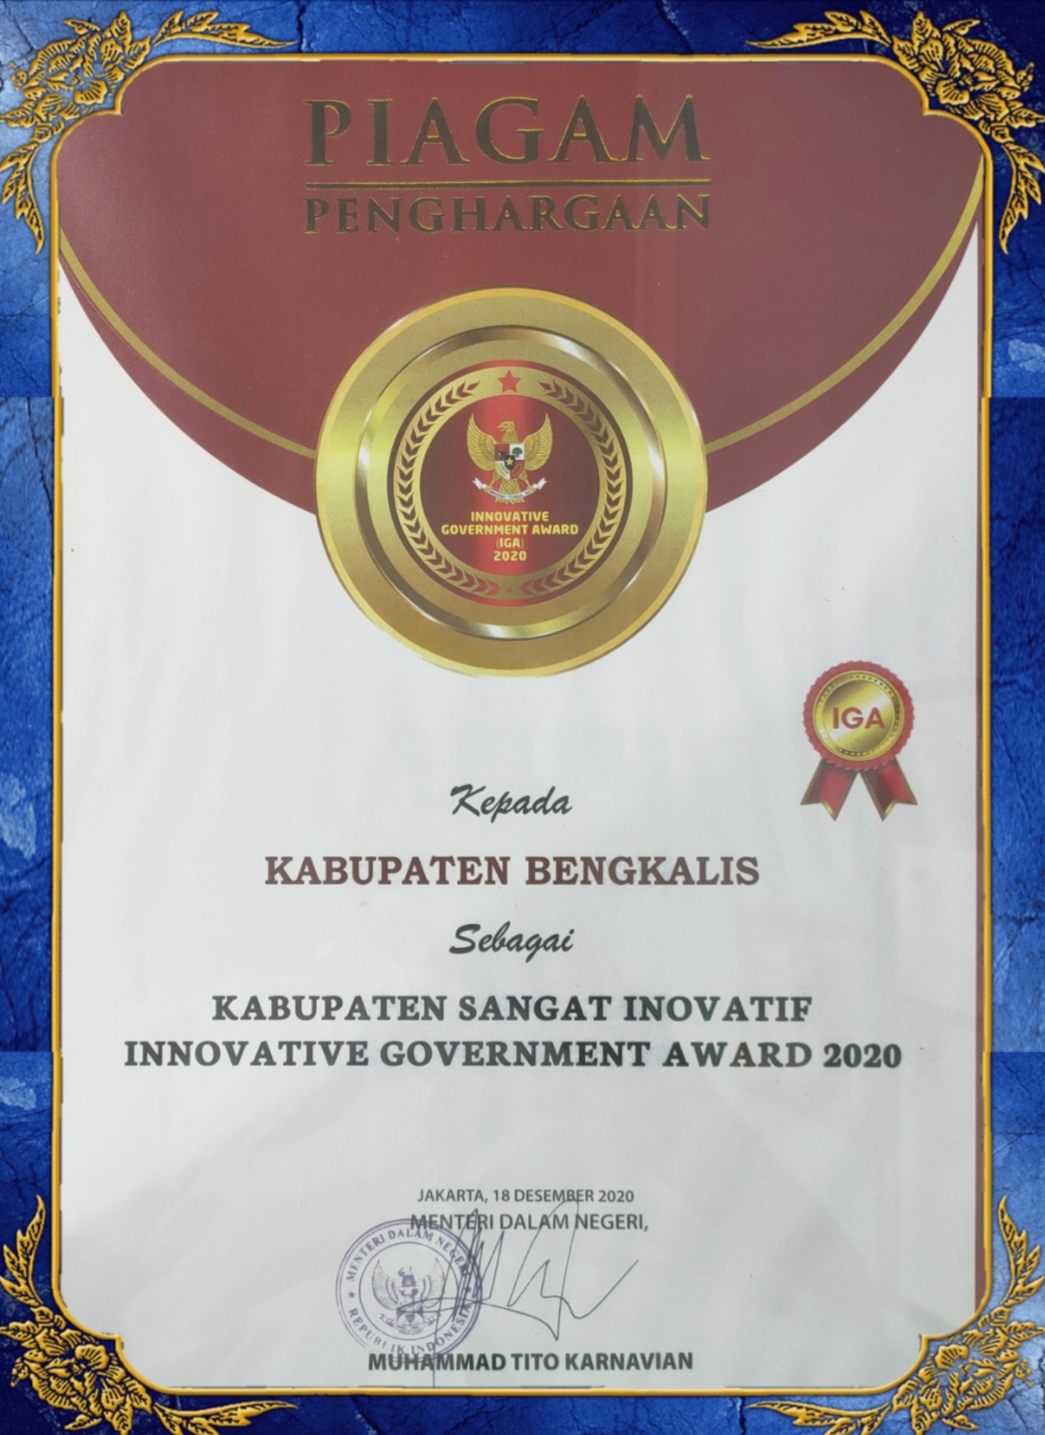 Innovative Government Awards (IGA)